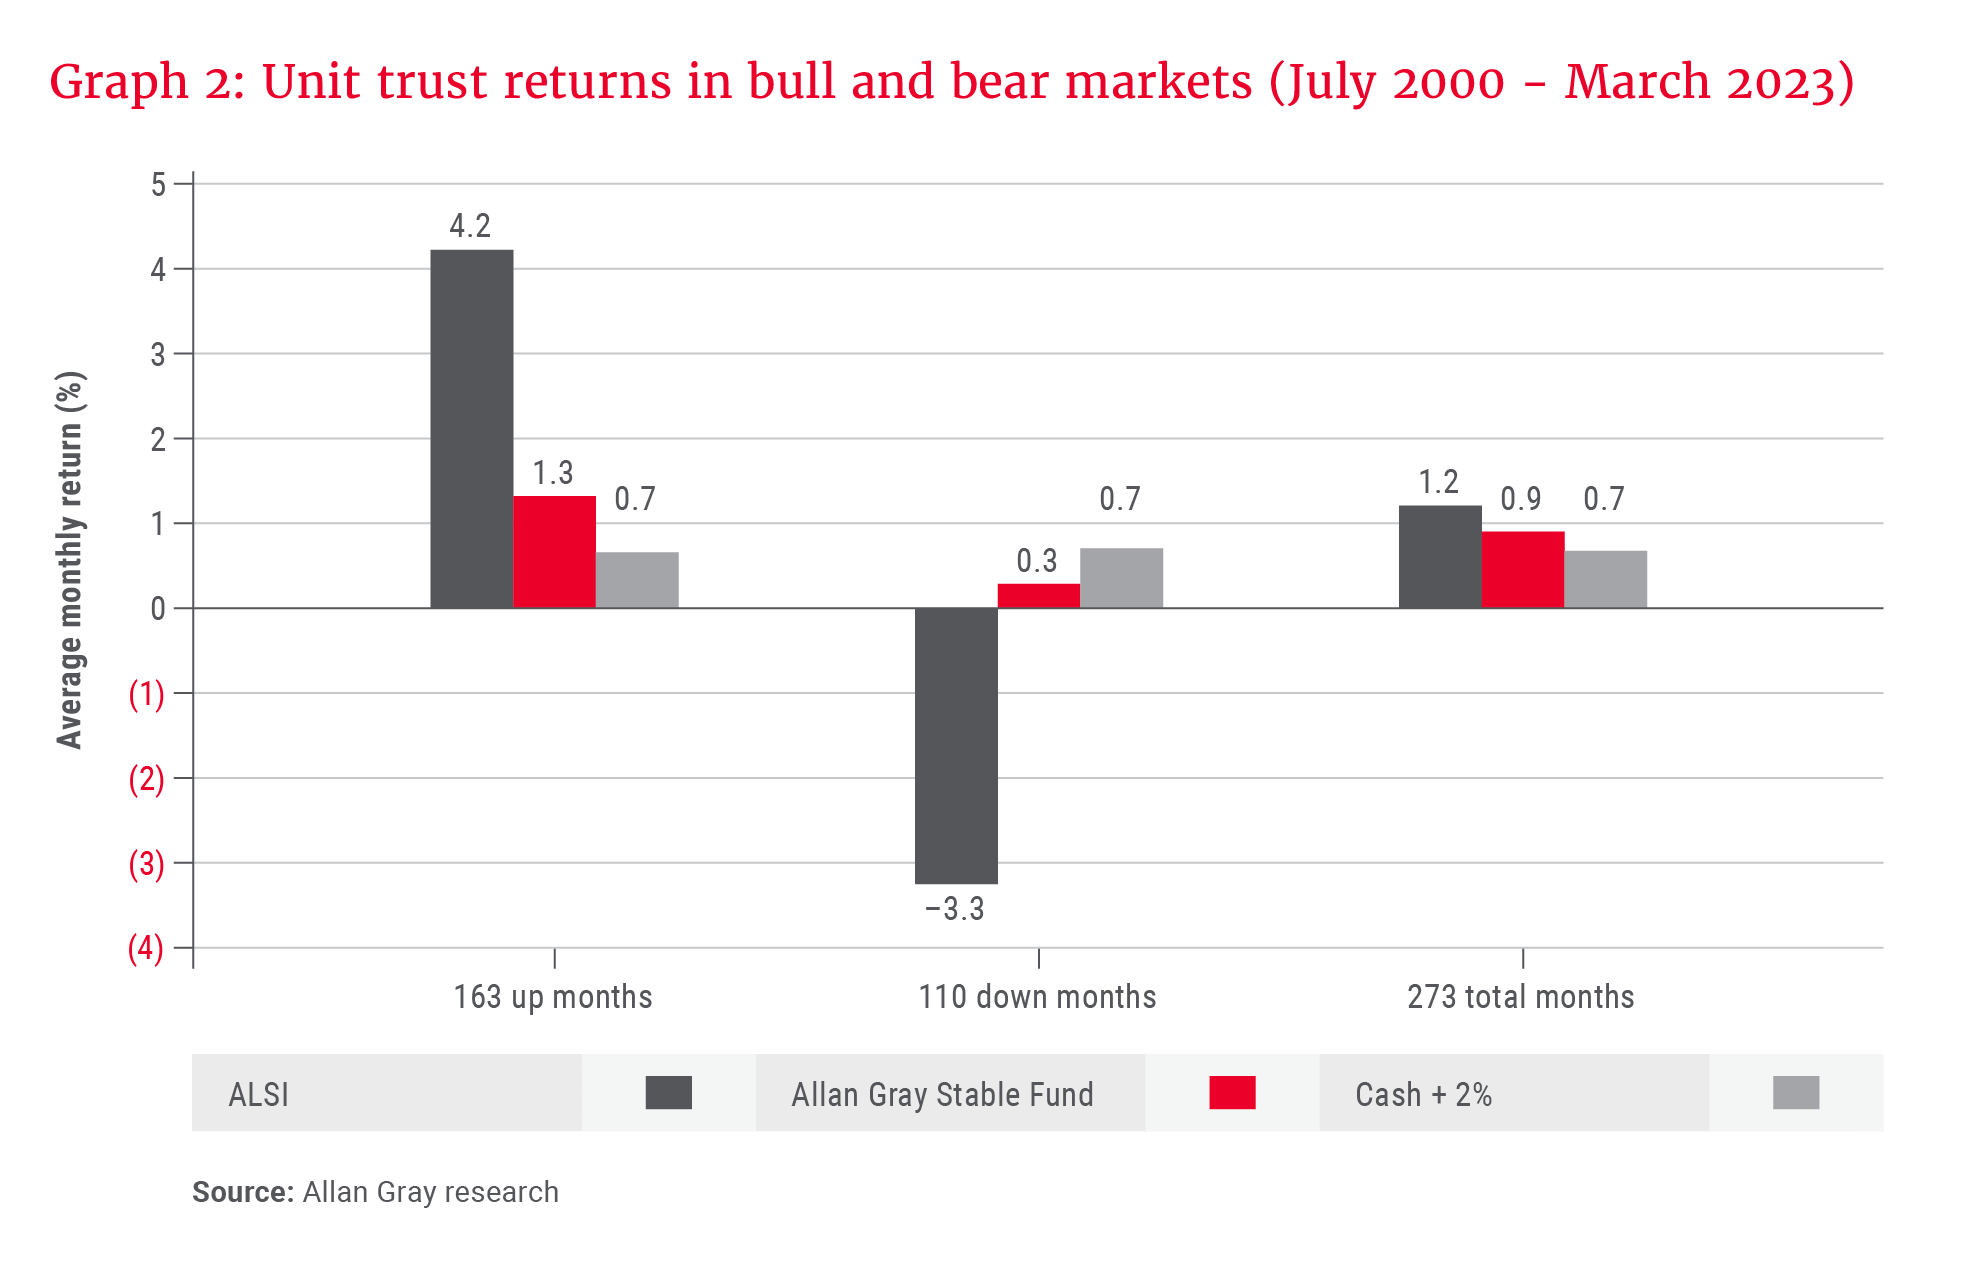 Unit trust returns in bull and bear markets (July 2000 - February 2023) - Allan Gray